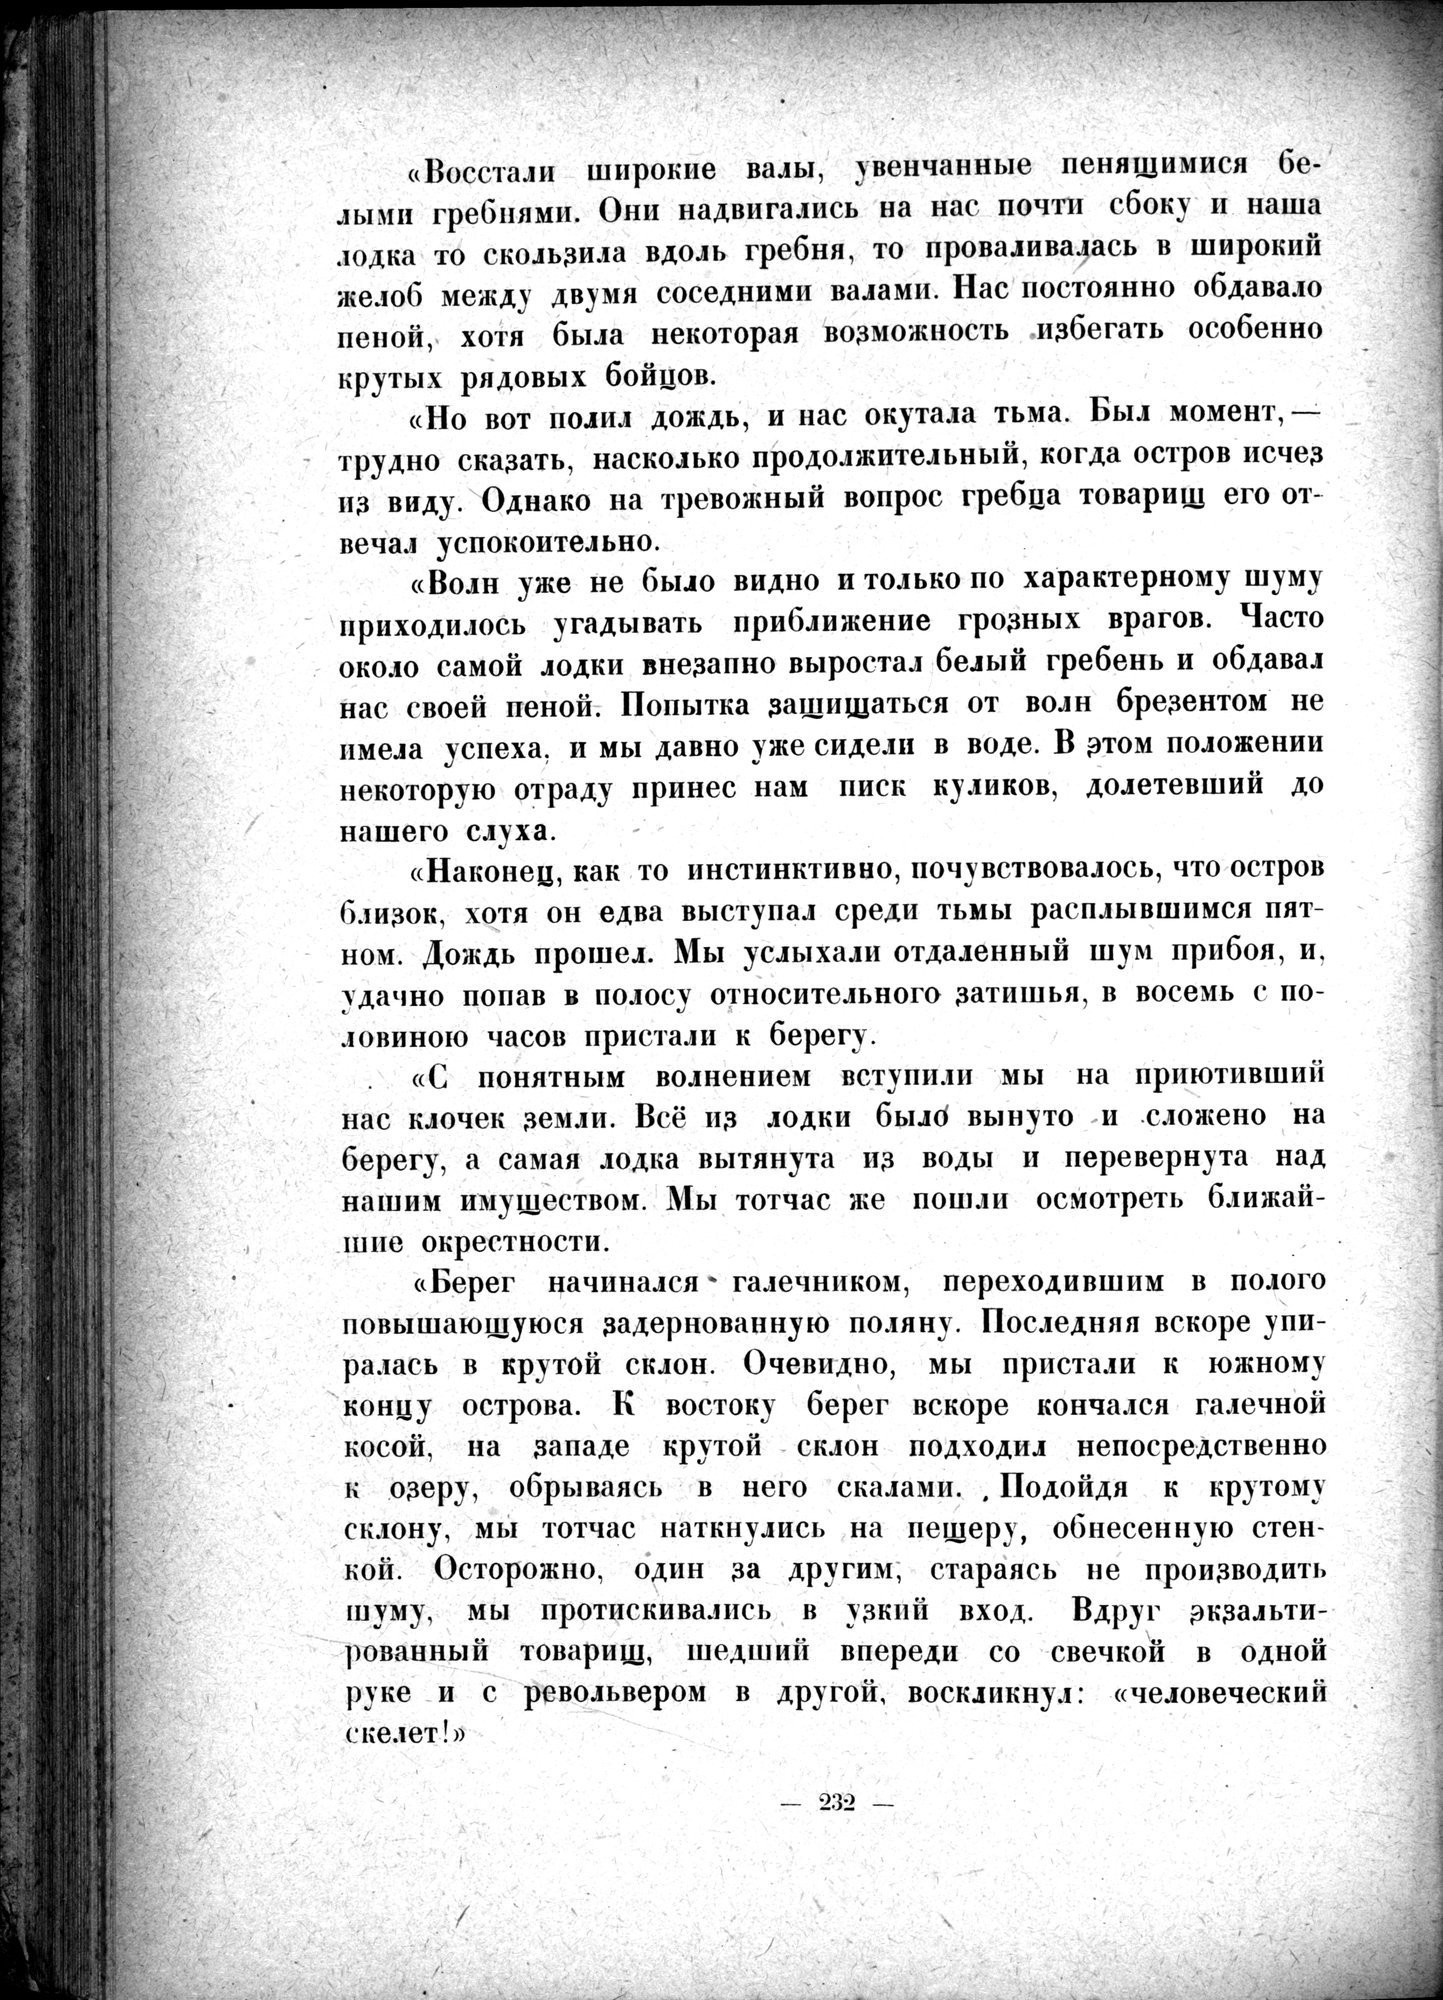 Mongoliya i Amdo i mertby gorod Khara-Khoto : vol.1 / Page 382 (Grayscale High Resolution Image)